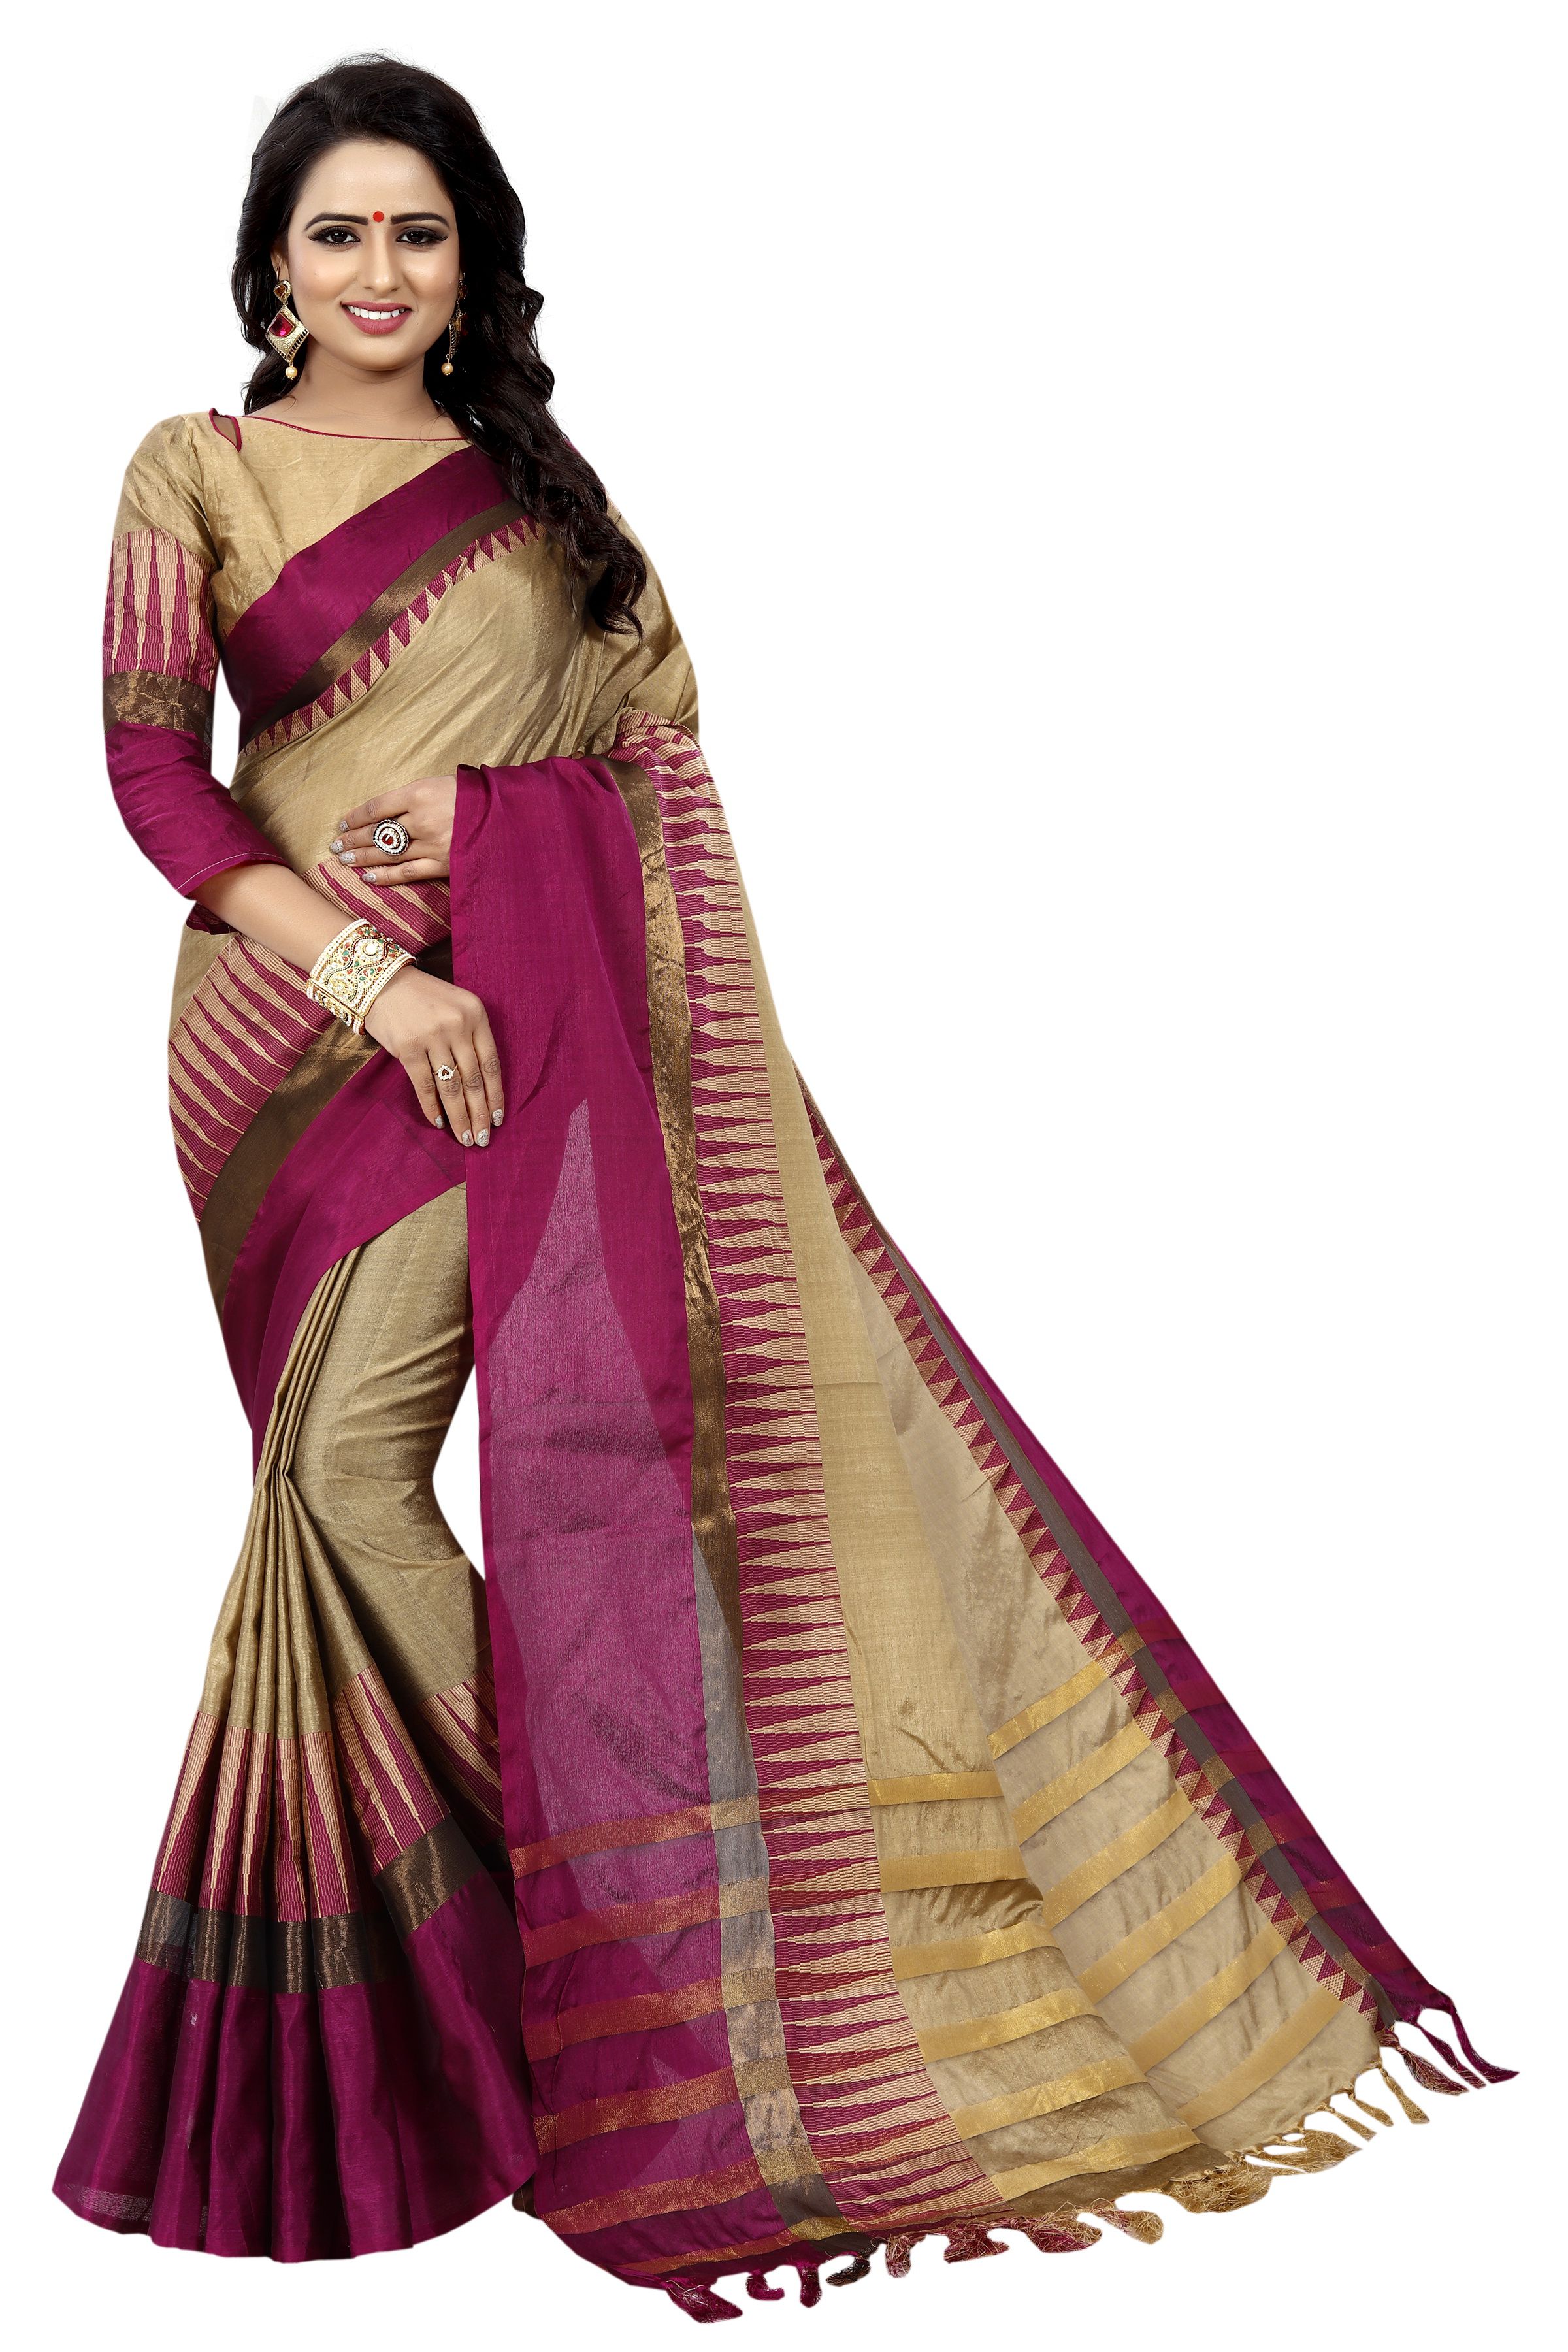 Aagam Fashion Pink Cotton Saree Buy Aagam Fashion Pink Cotton Saree Online At Low Price